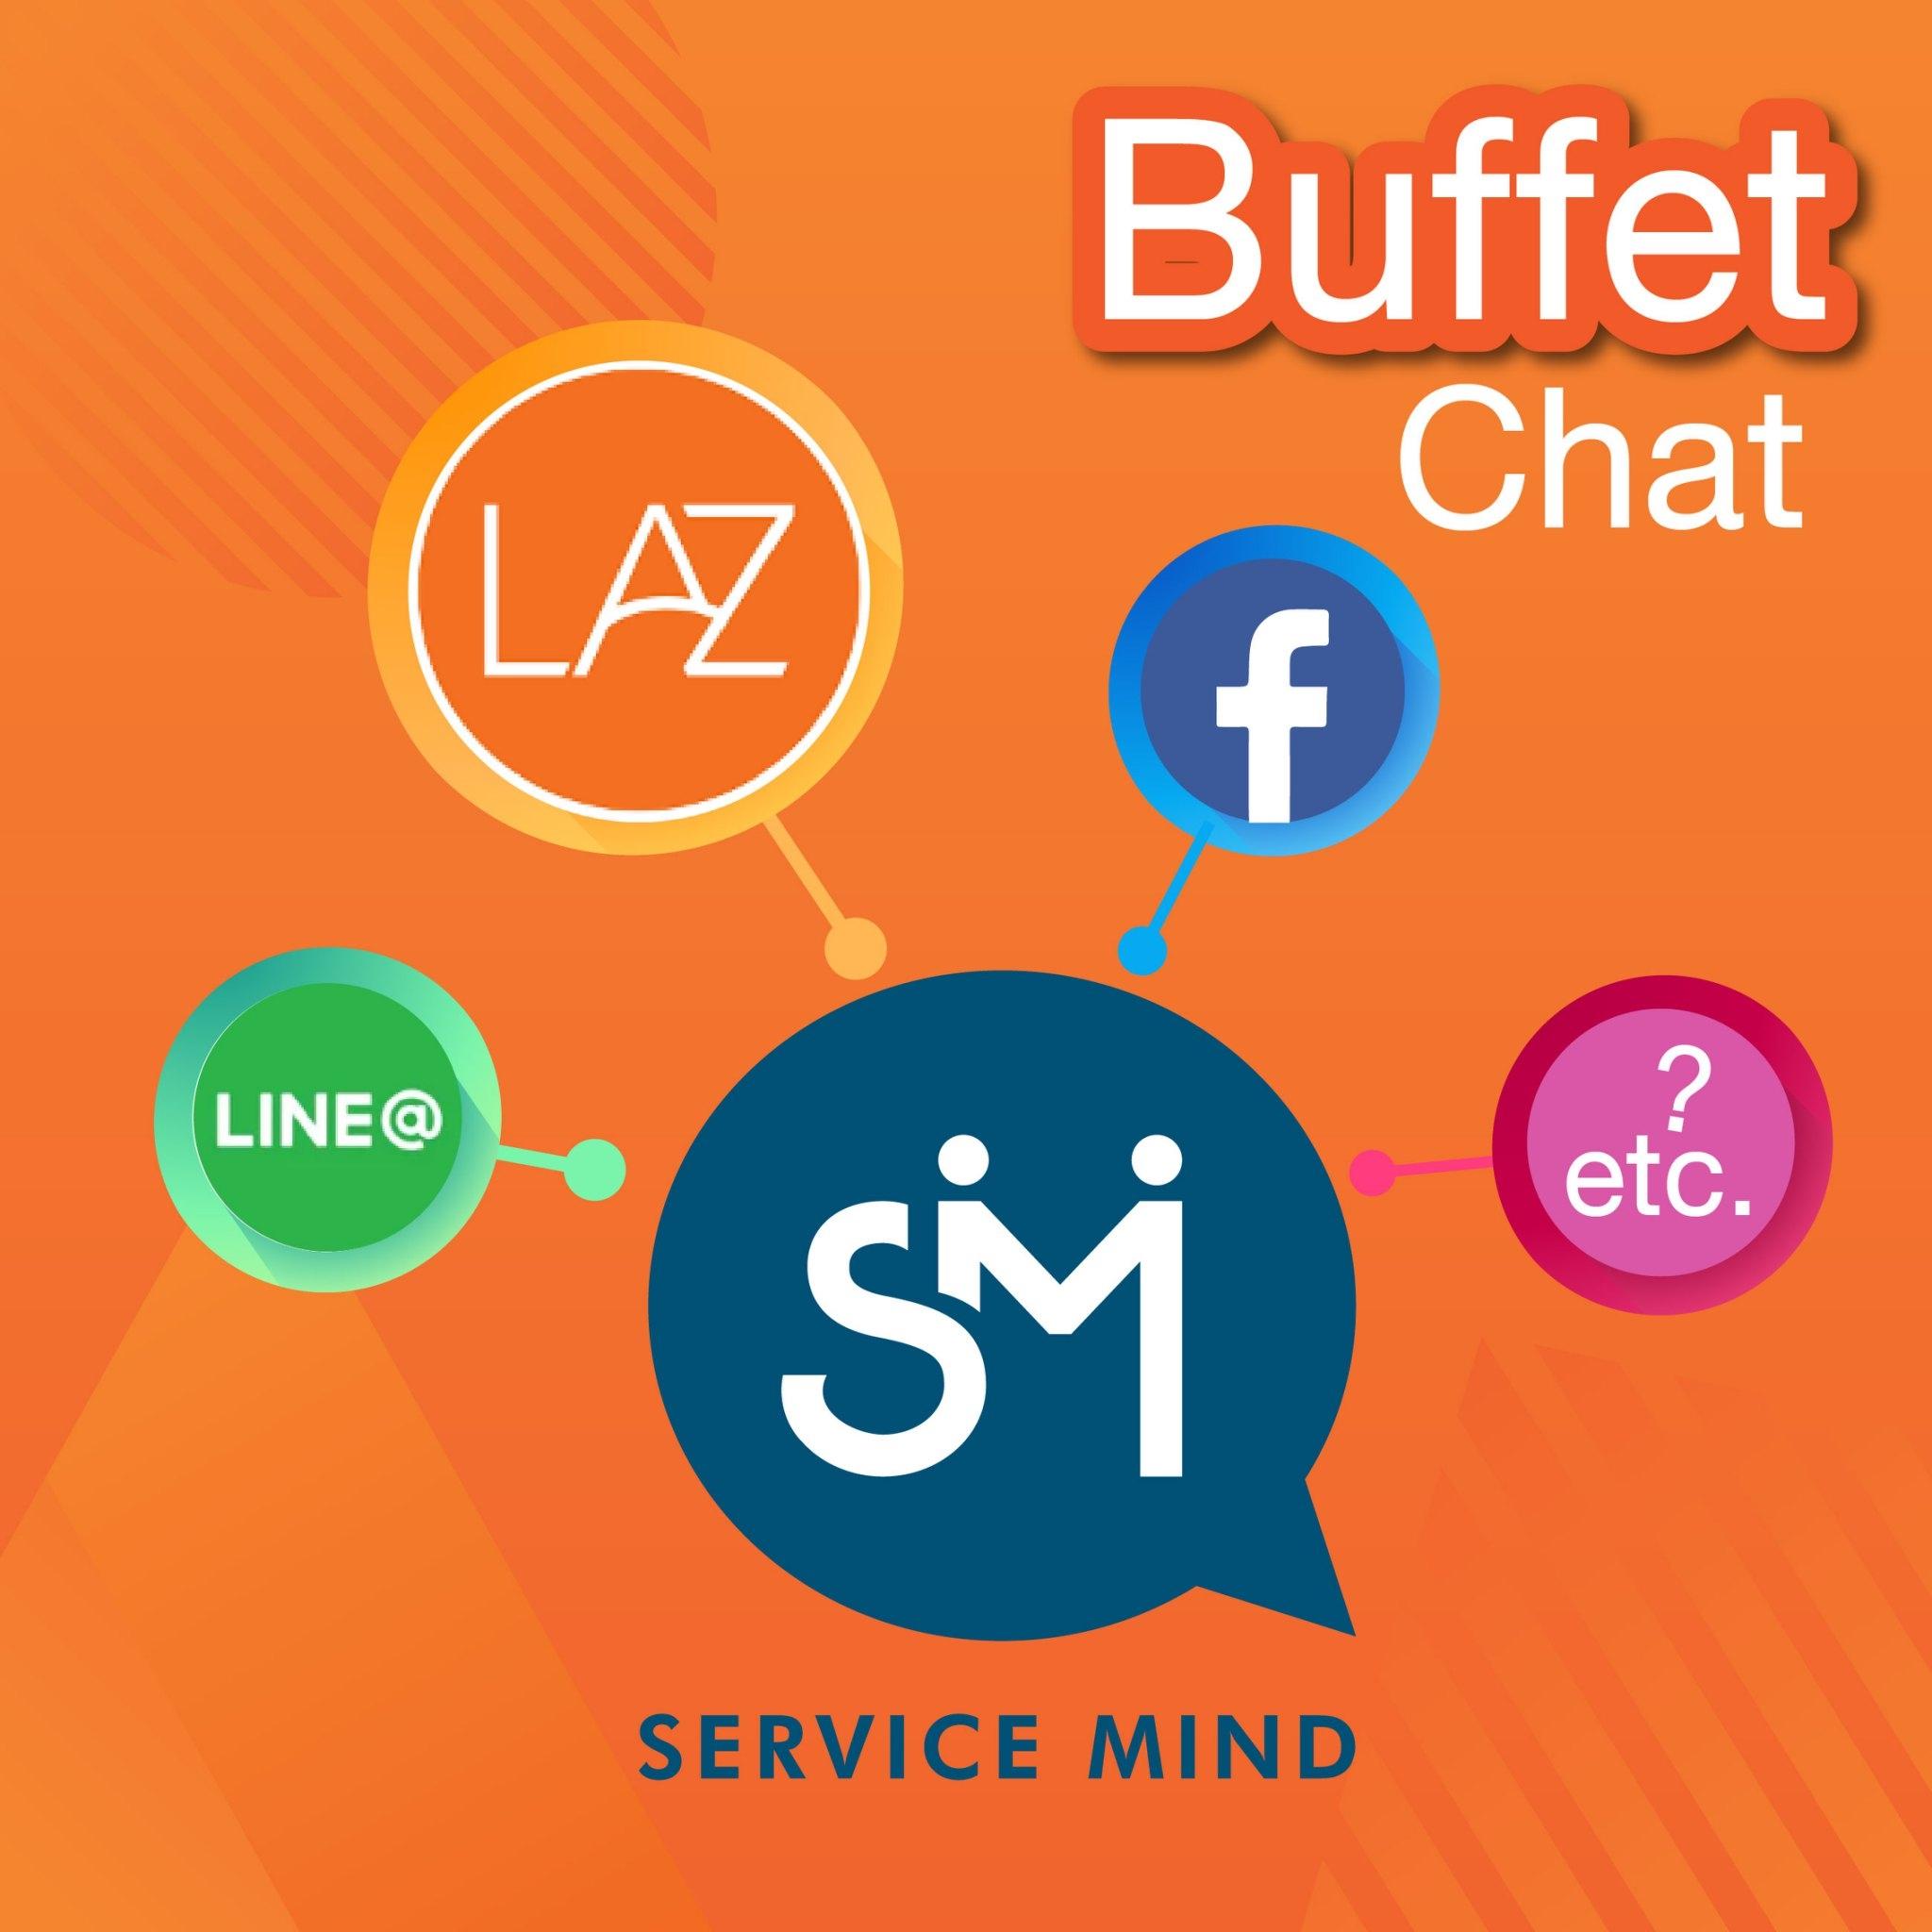 Buffet chatting service (Social) 2 ช่องทาง แต่ละช่องไม่เกิน 250 แชท